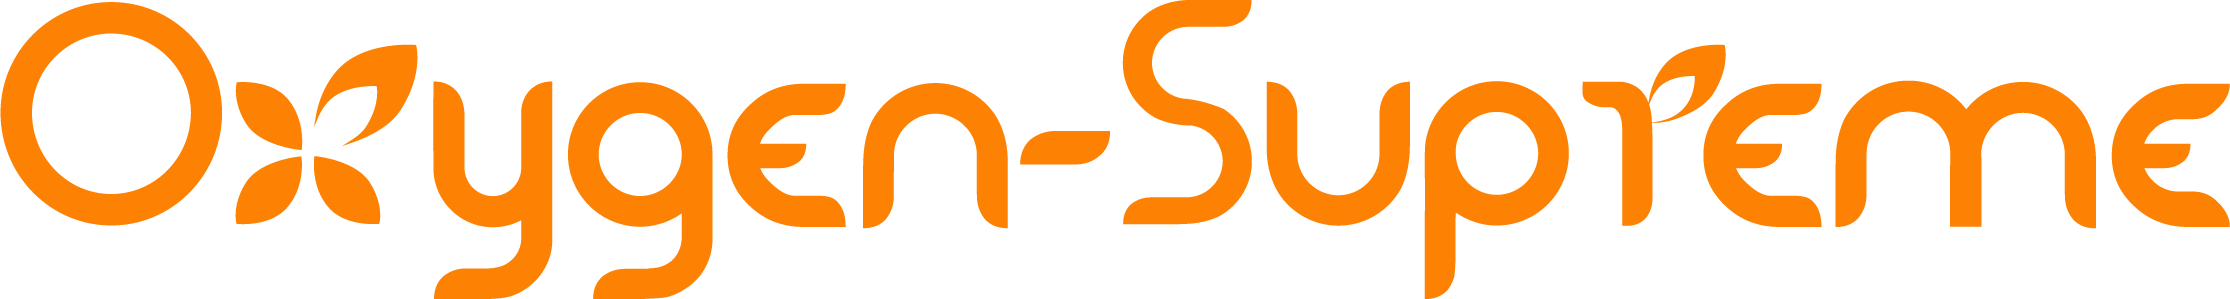 Oxygen-Supreme Logo